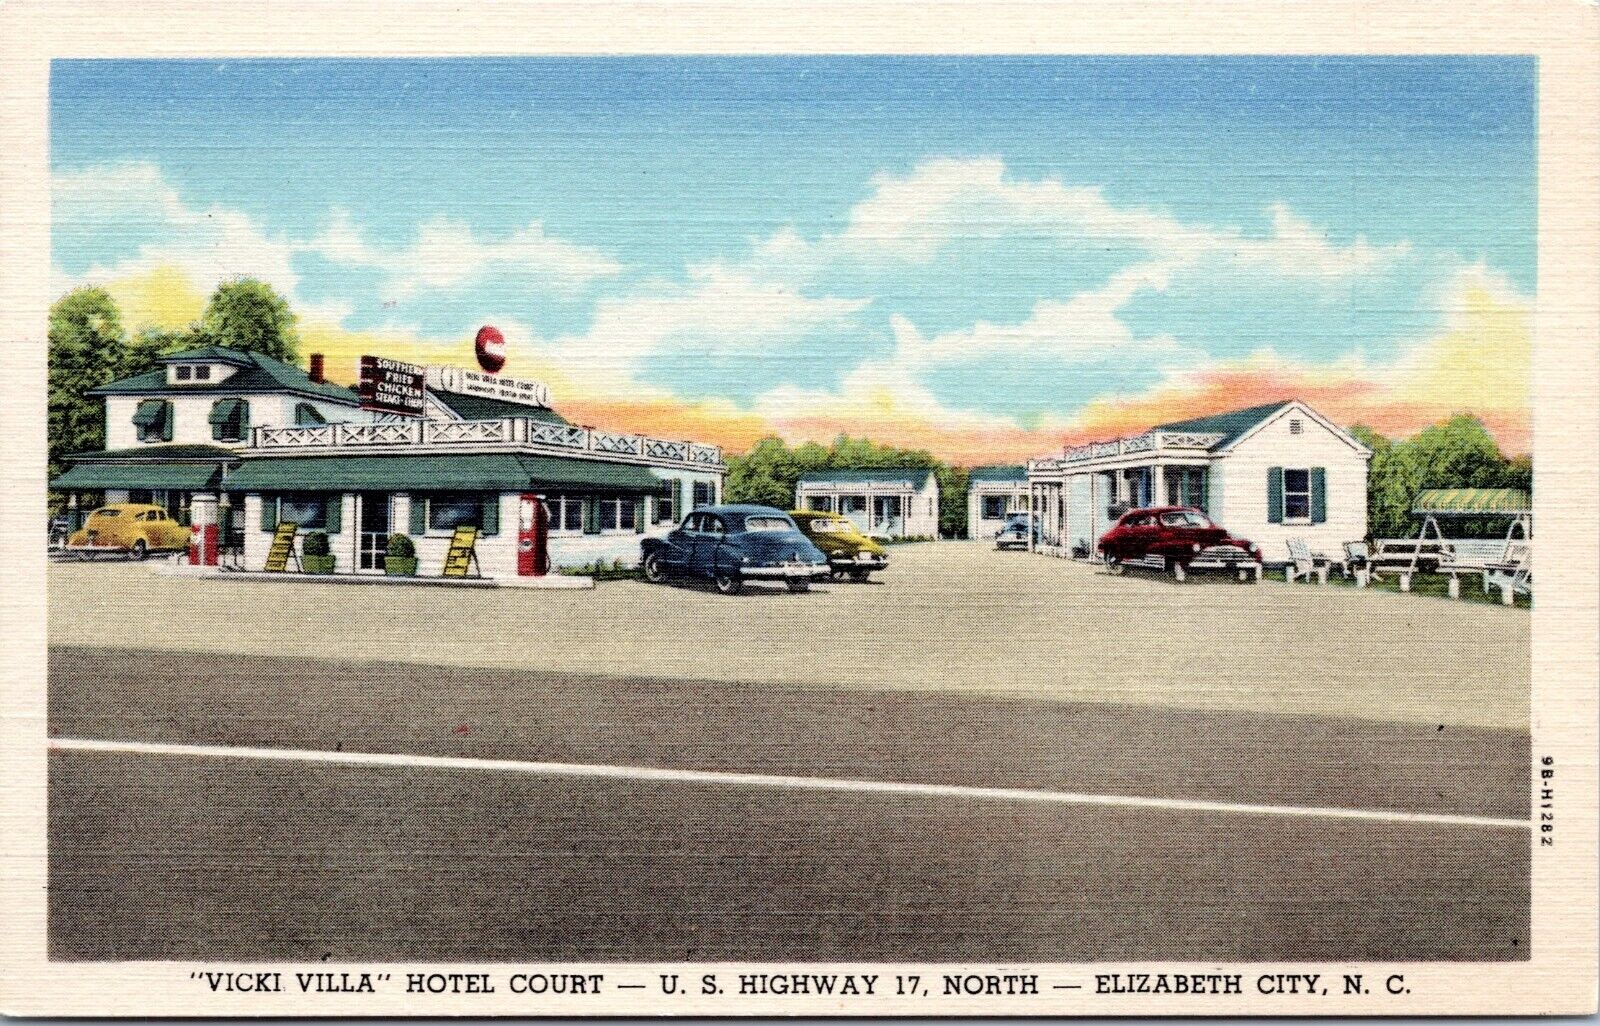 Vicki Villa Hotel Court, Elizabeth City North Carolina - 1949 Linen Postcard